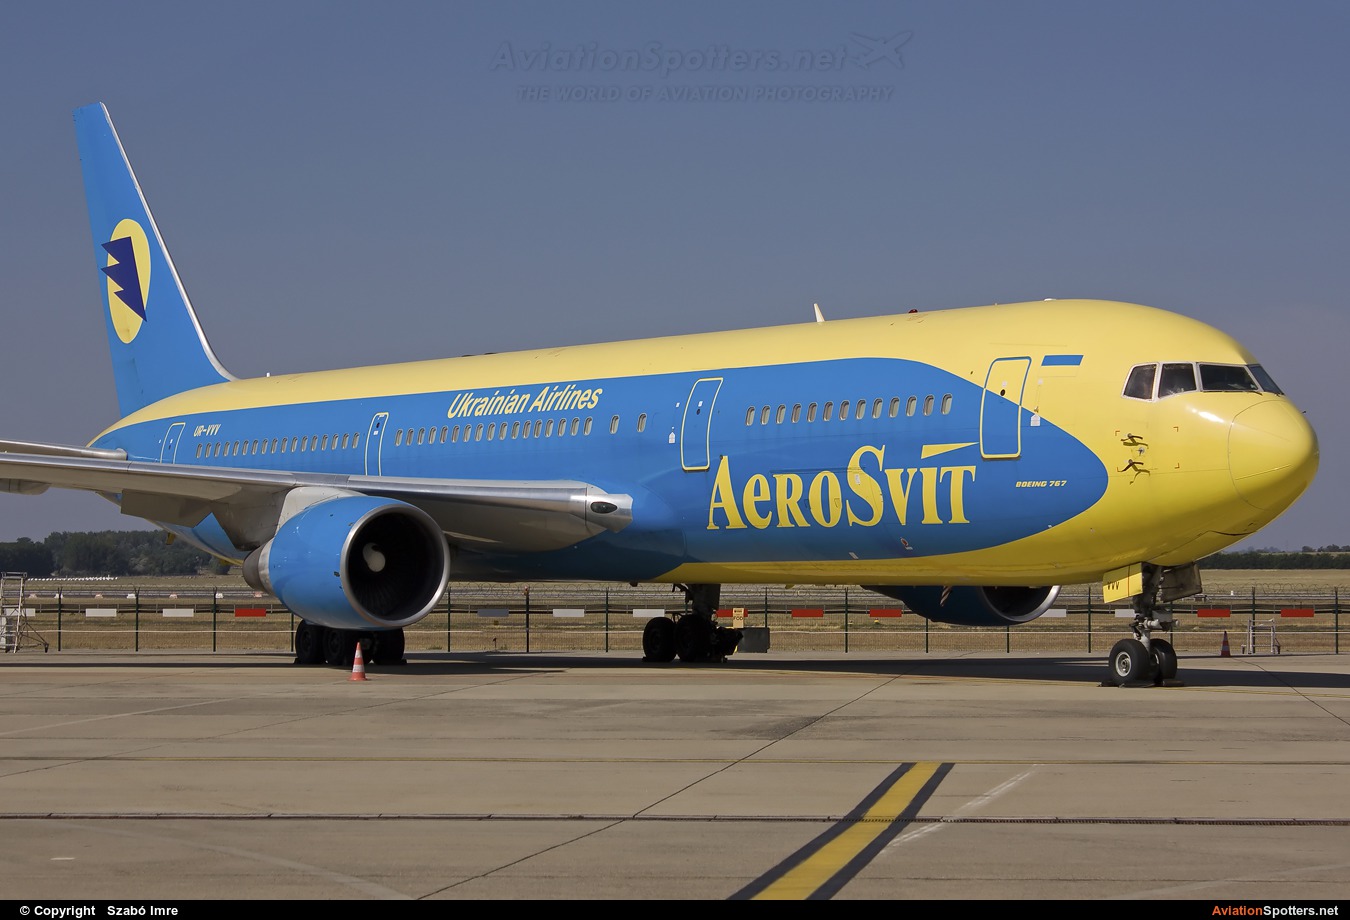 Aerosvit - Ukrainian Airlines  -  767-300  (UR-VVV) By Szabó Imre (SzImre71)